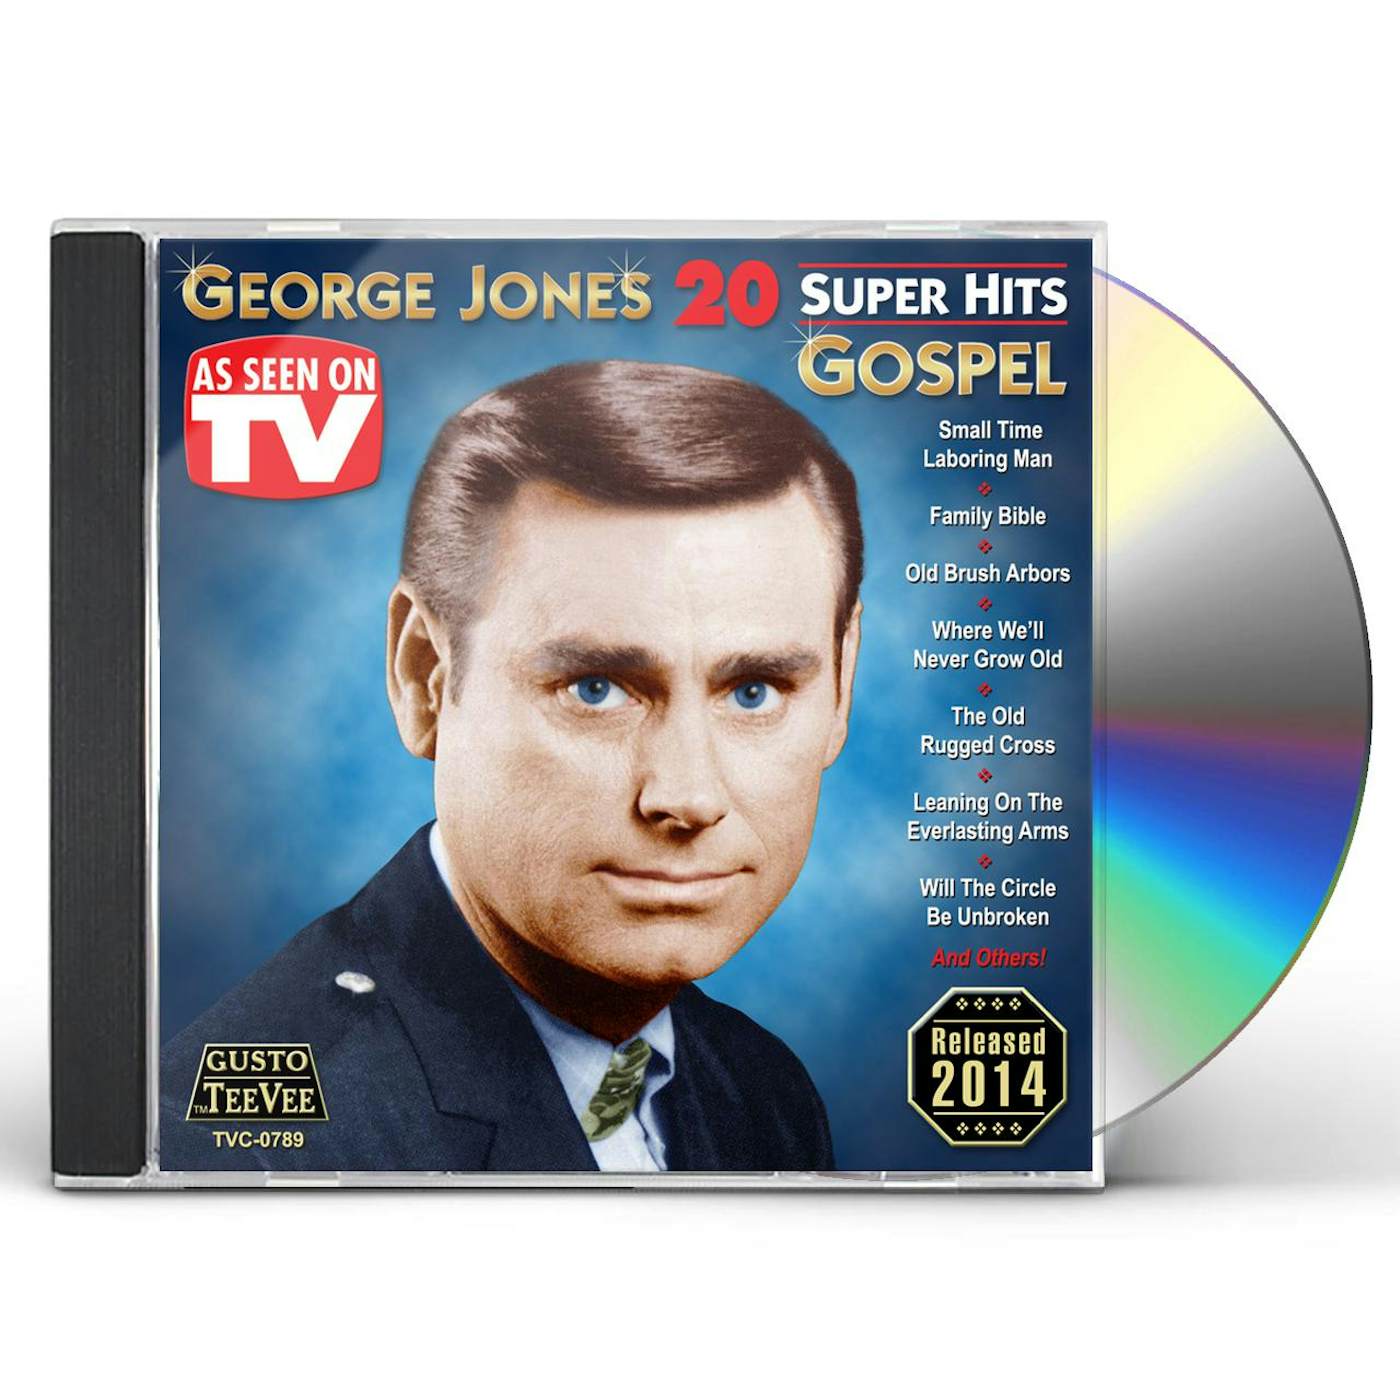 George Jones 20 SUPER HITS GOSPEL CD